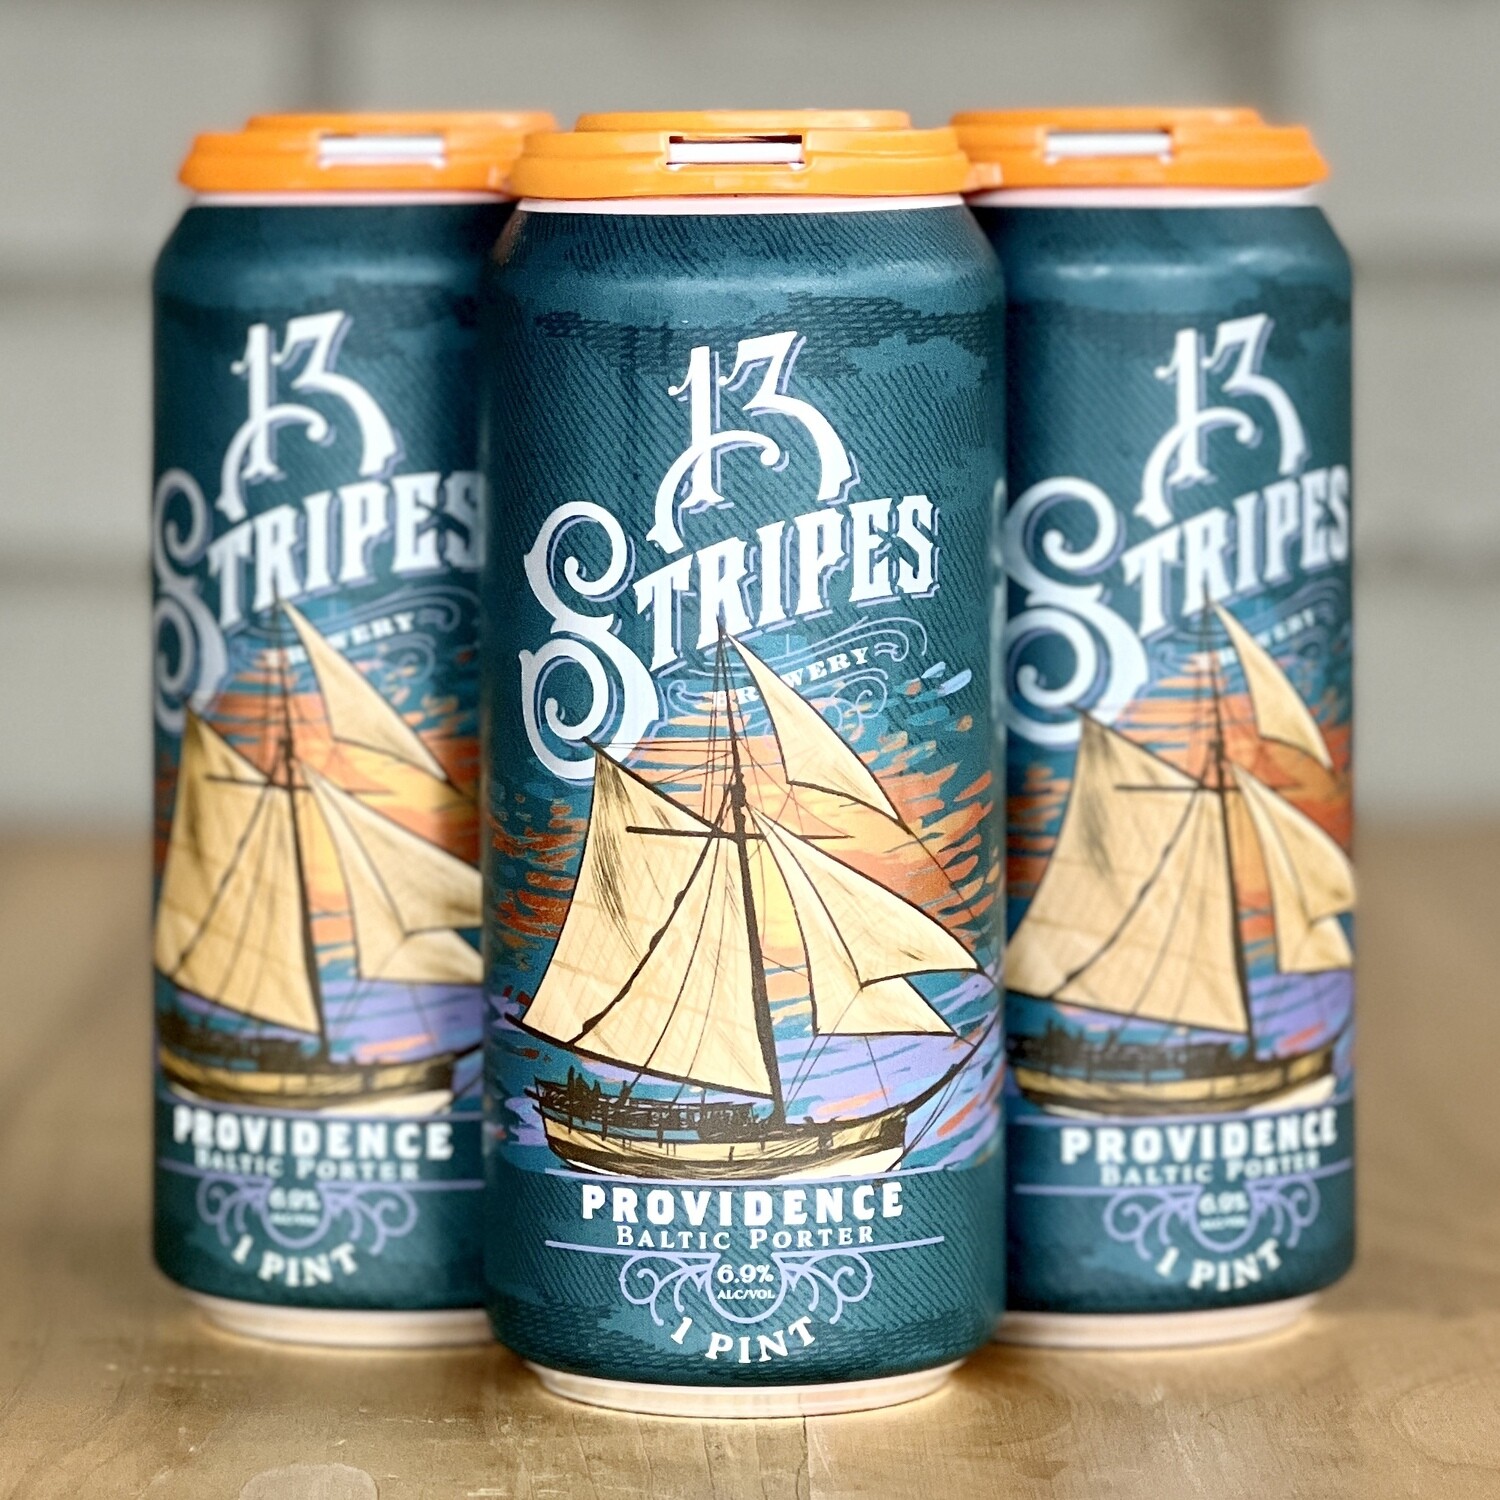 13 Stripes Brewery Providence (4pk)